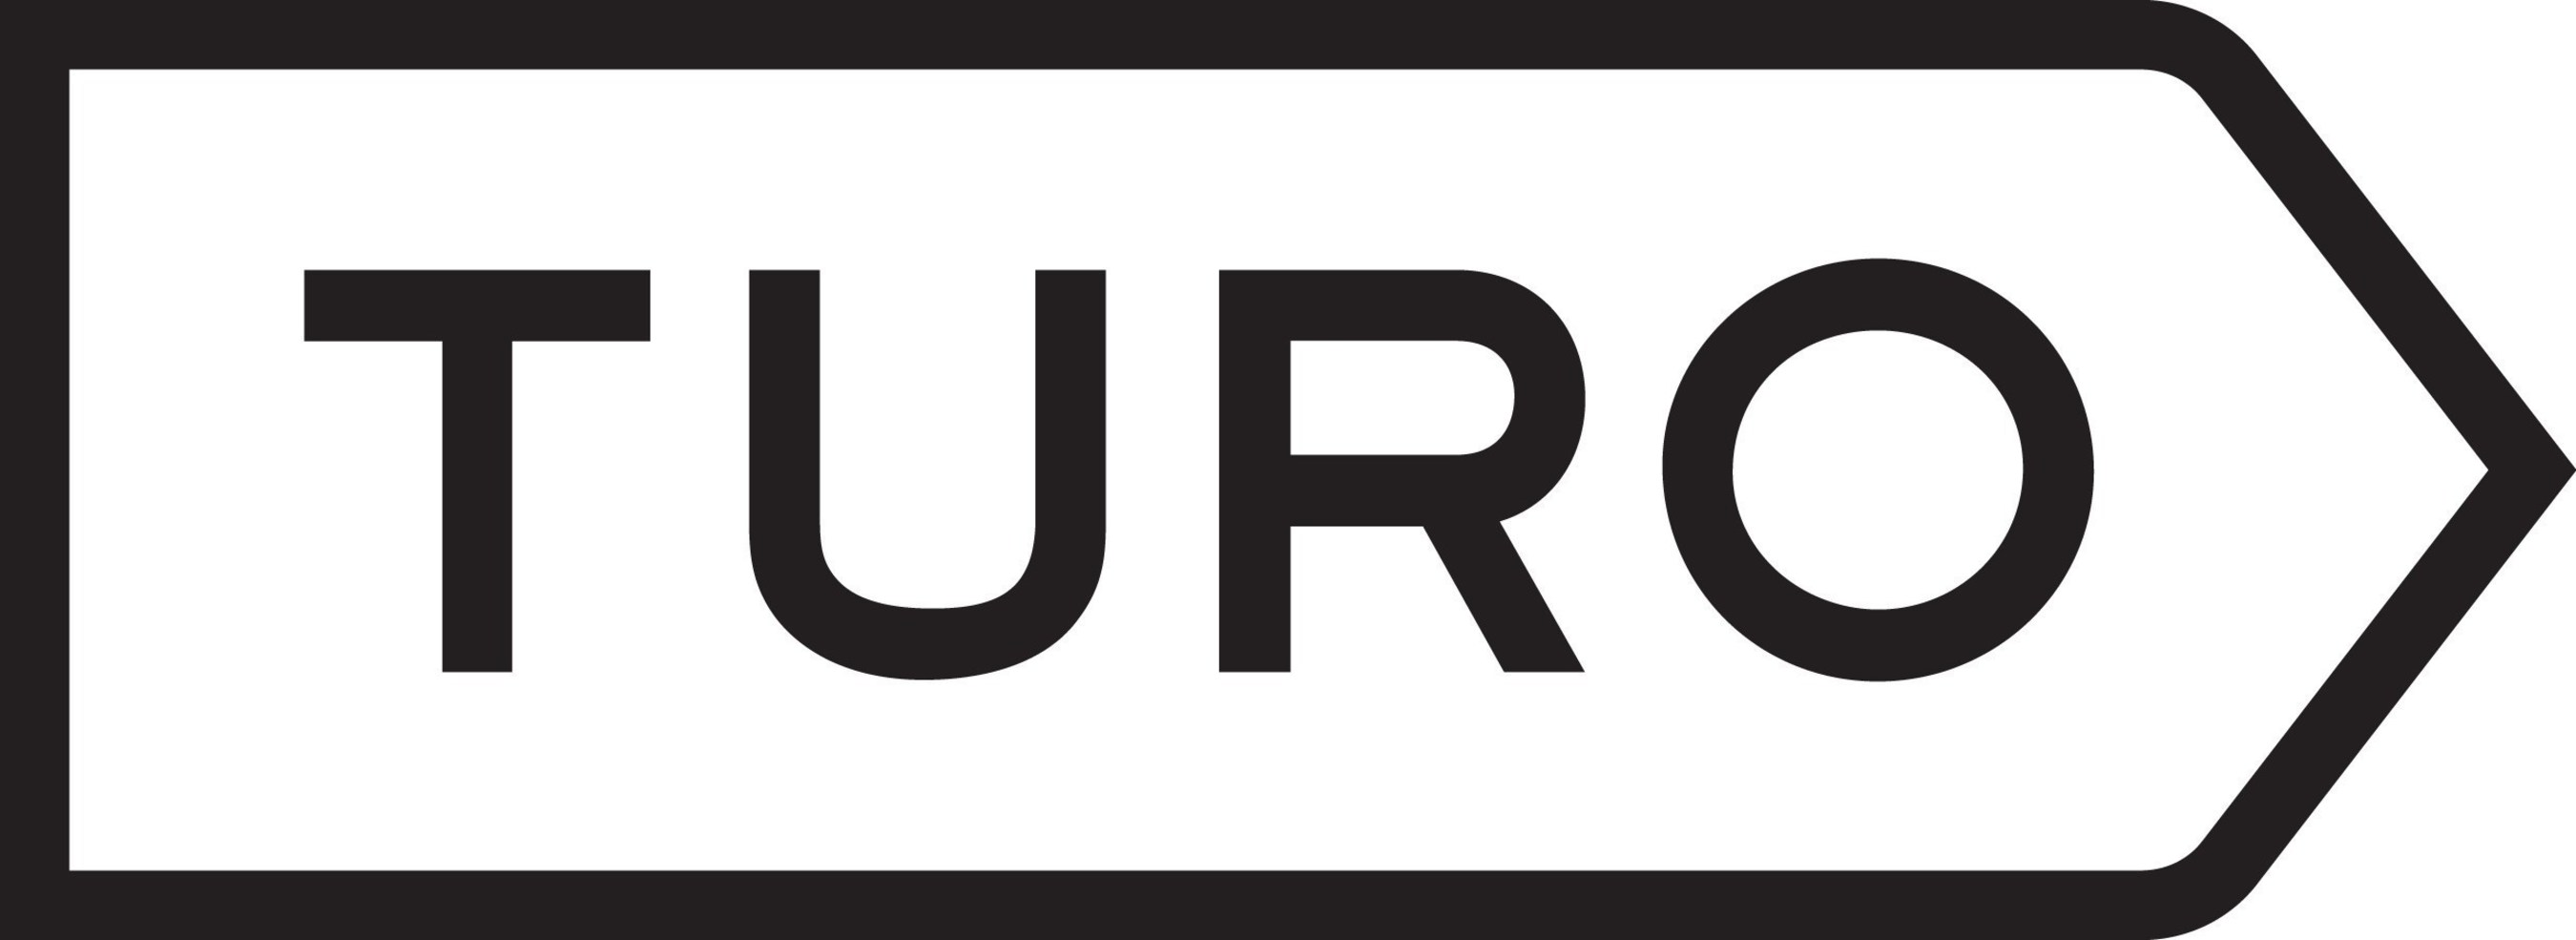 Leading car rental marketplace, RelayRides, rebrands as Turo